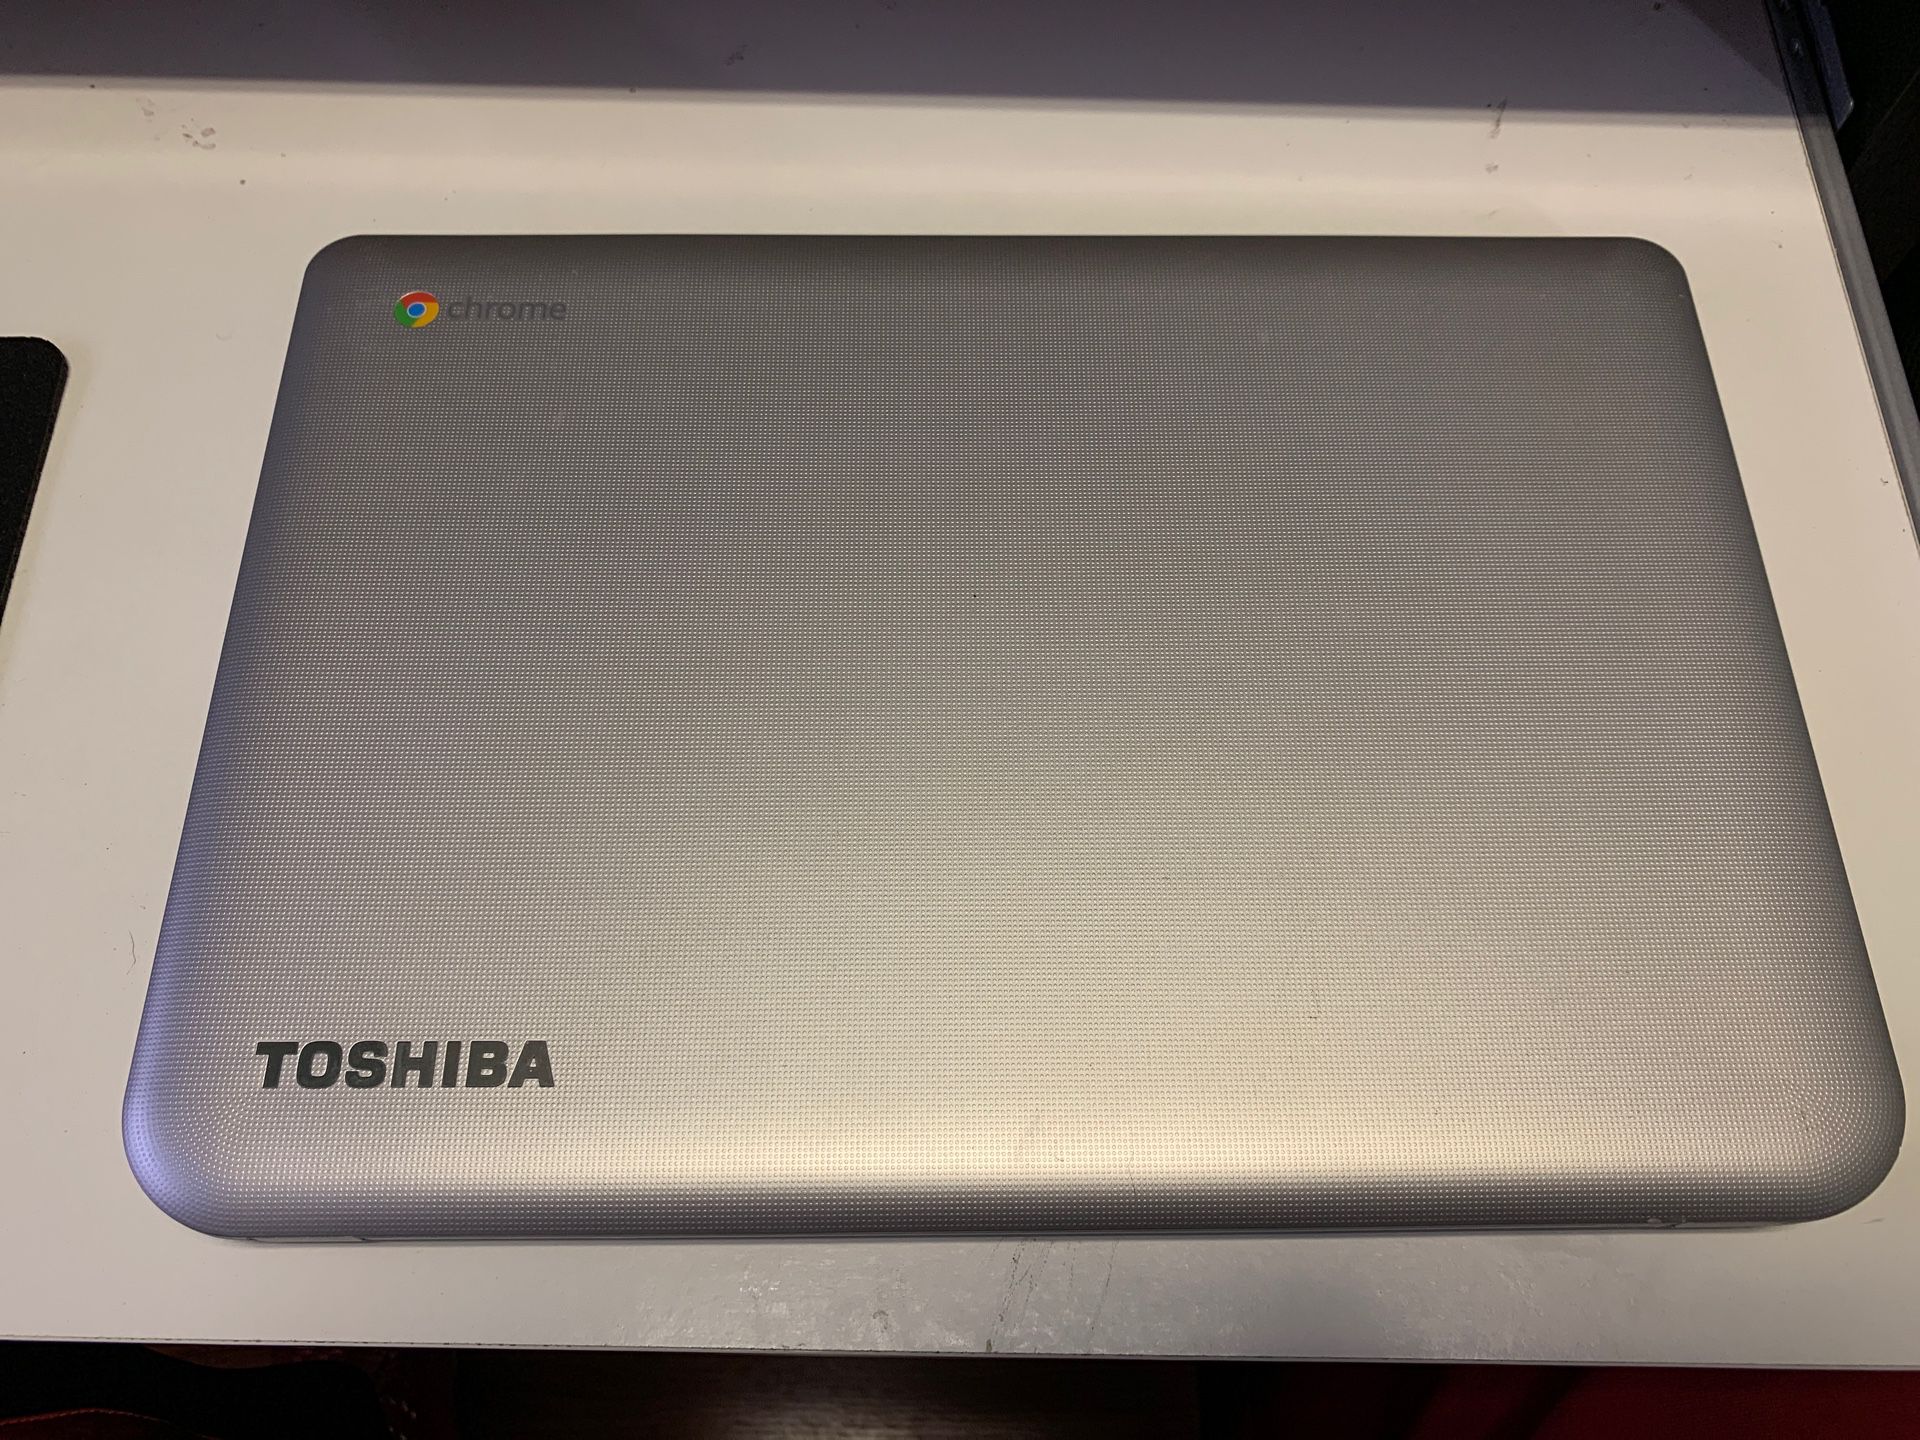 Toshiba Chromebook laptop